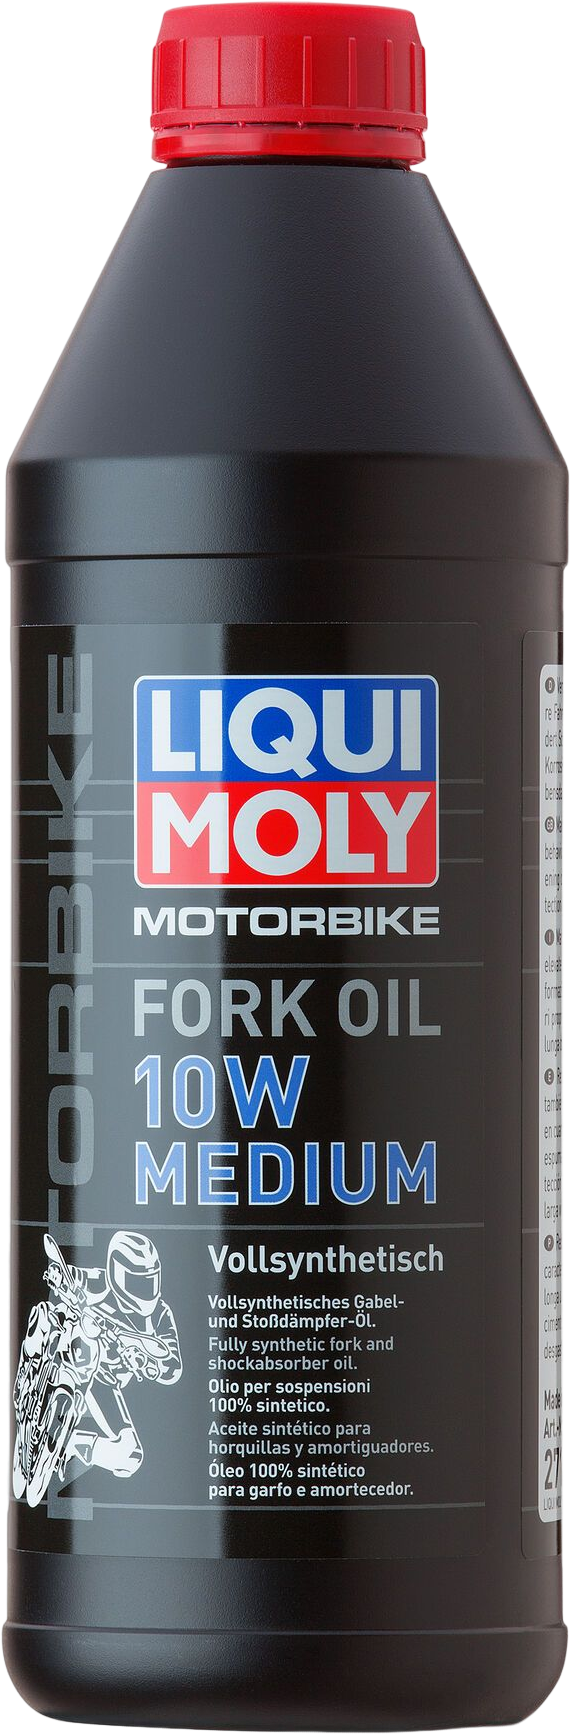 Liqui Moly Motorbike Fork Oil 10W medium, 1 lt